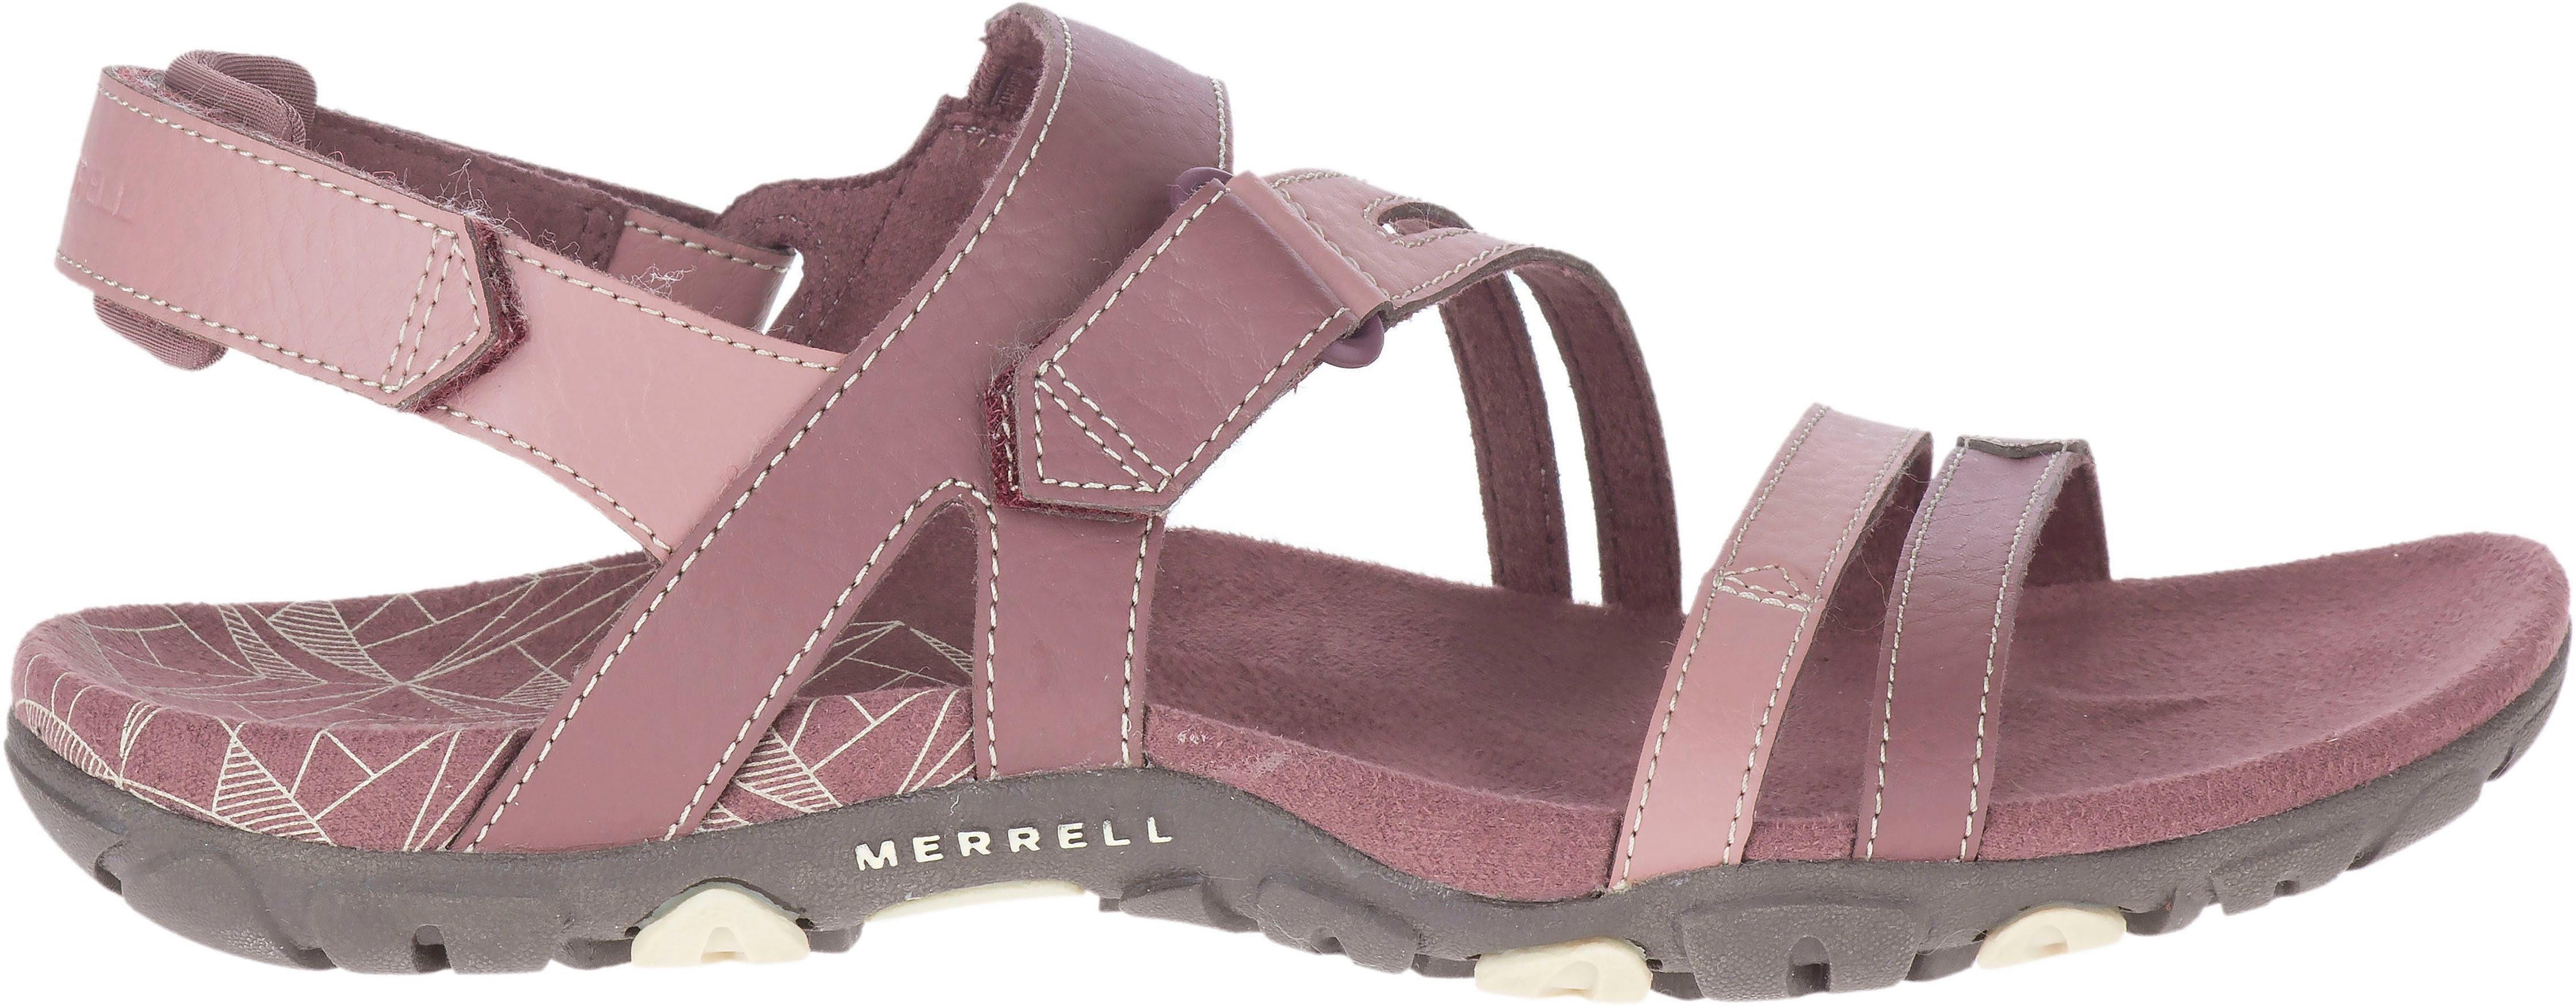 Merrell SANDSPUR Klettverschluss ROSE mit Sandale CONVERT